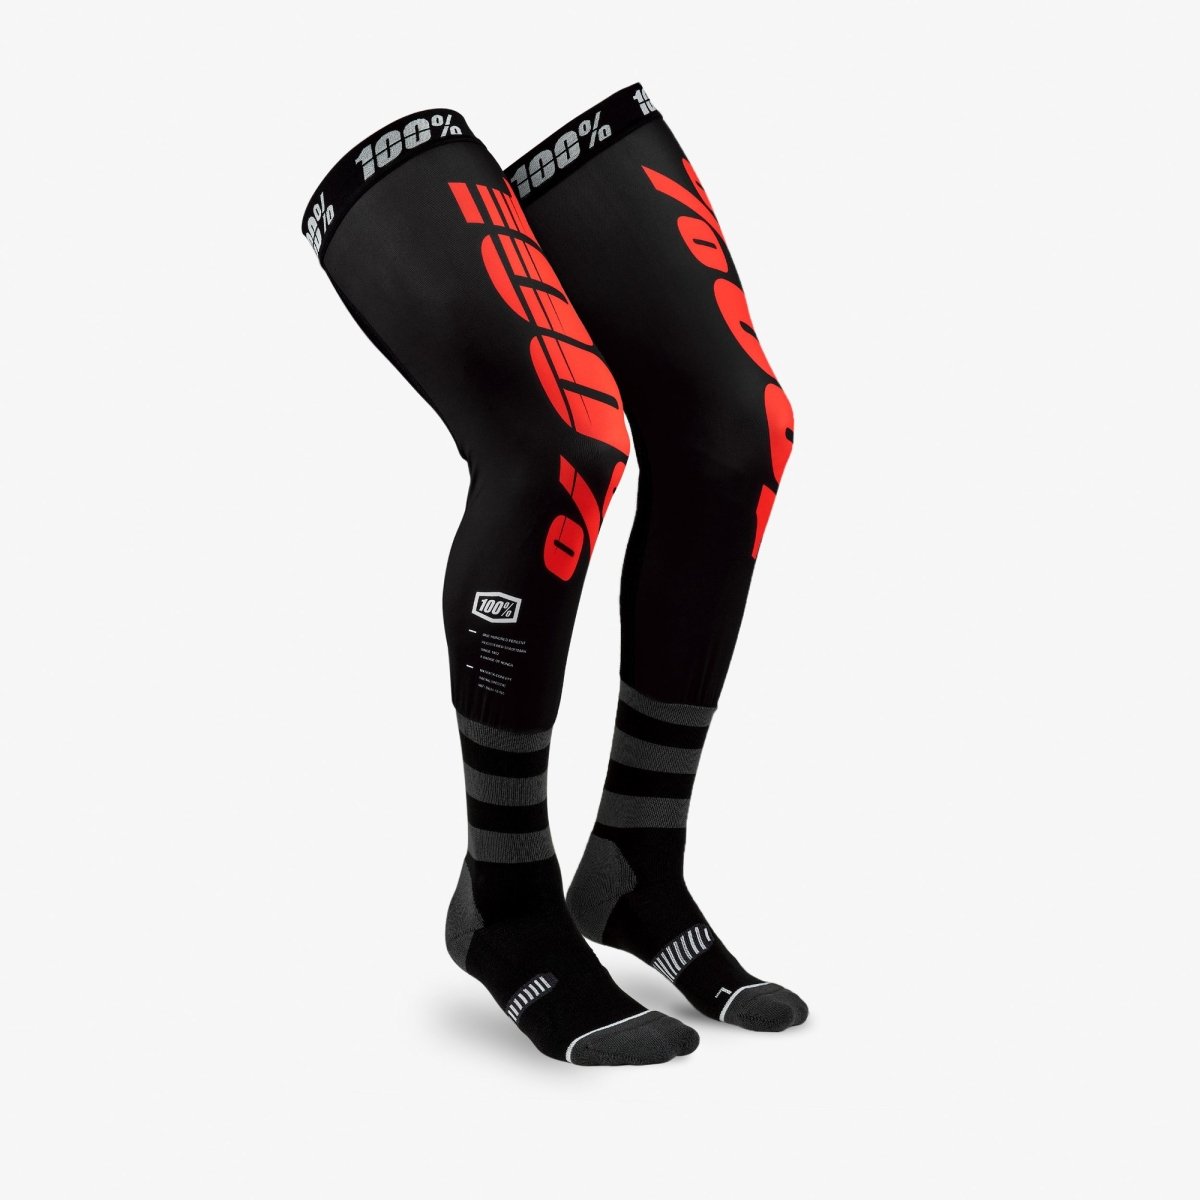 100% Knee Brace Performance Socks - Build And Ride